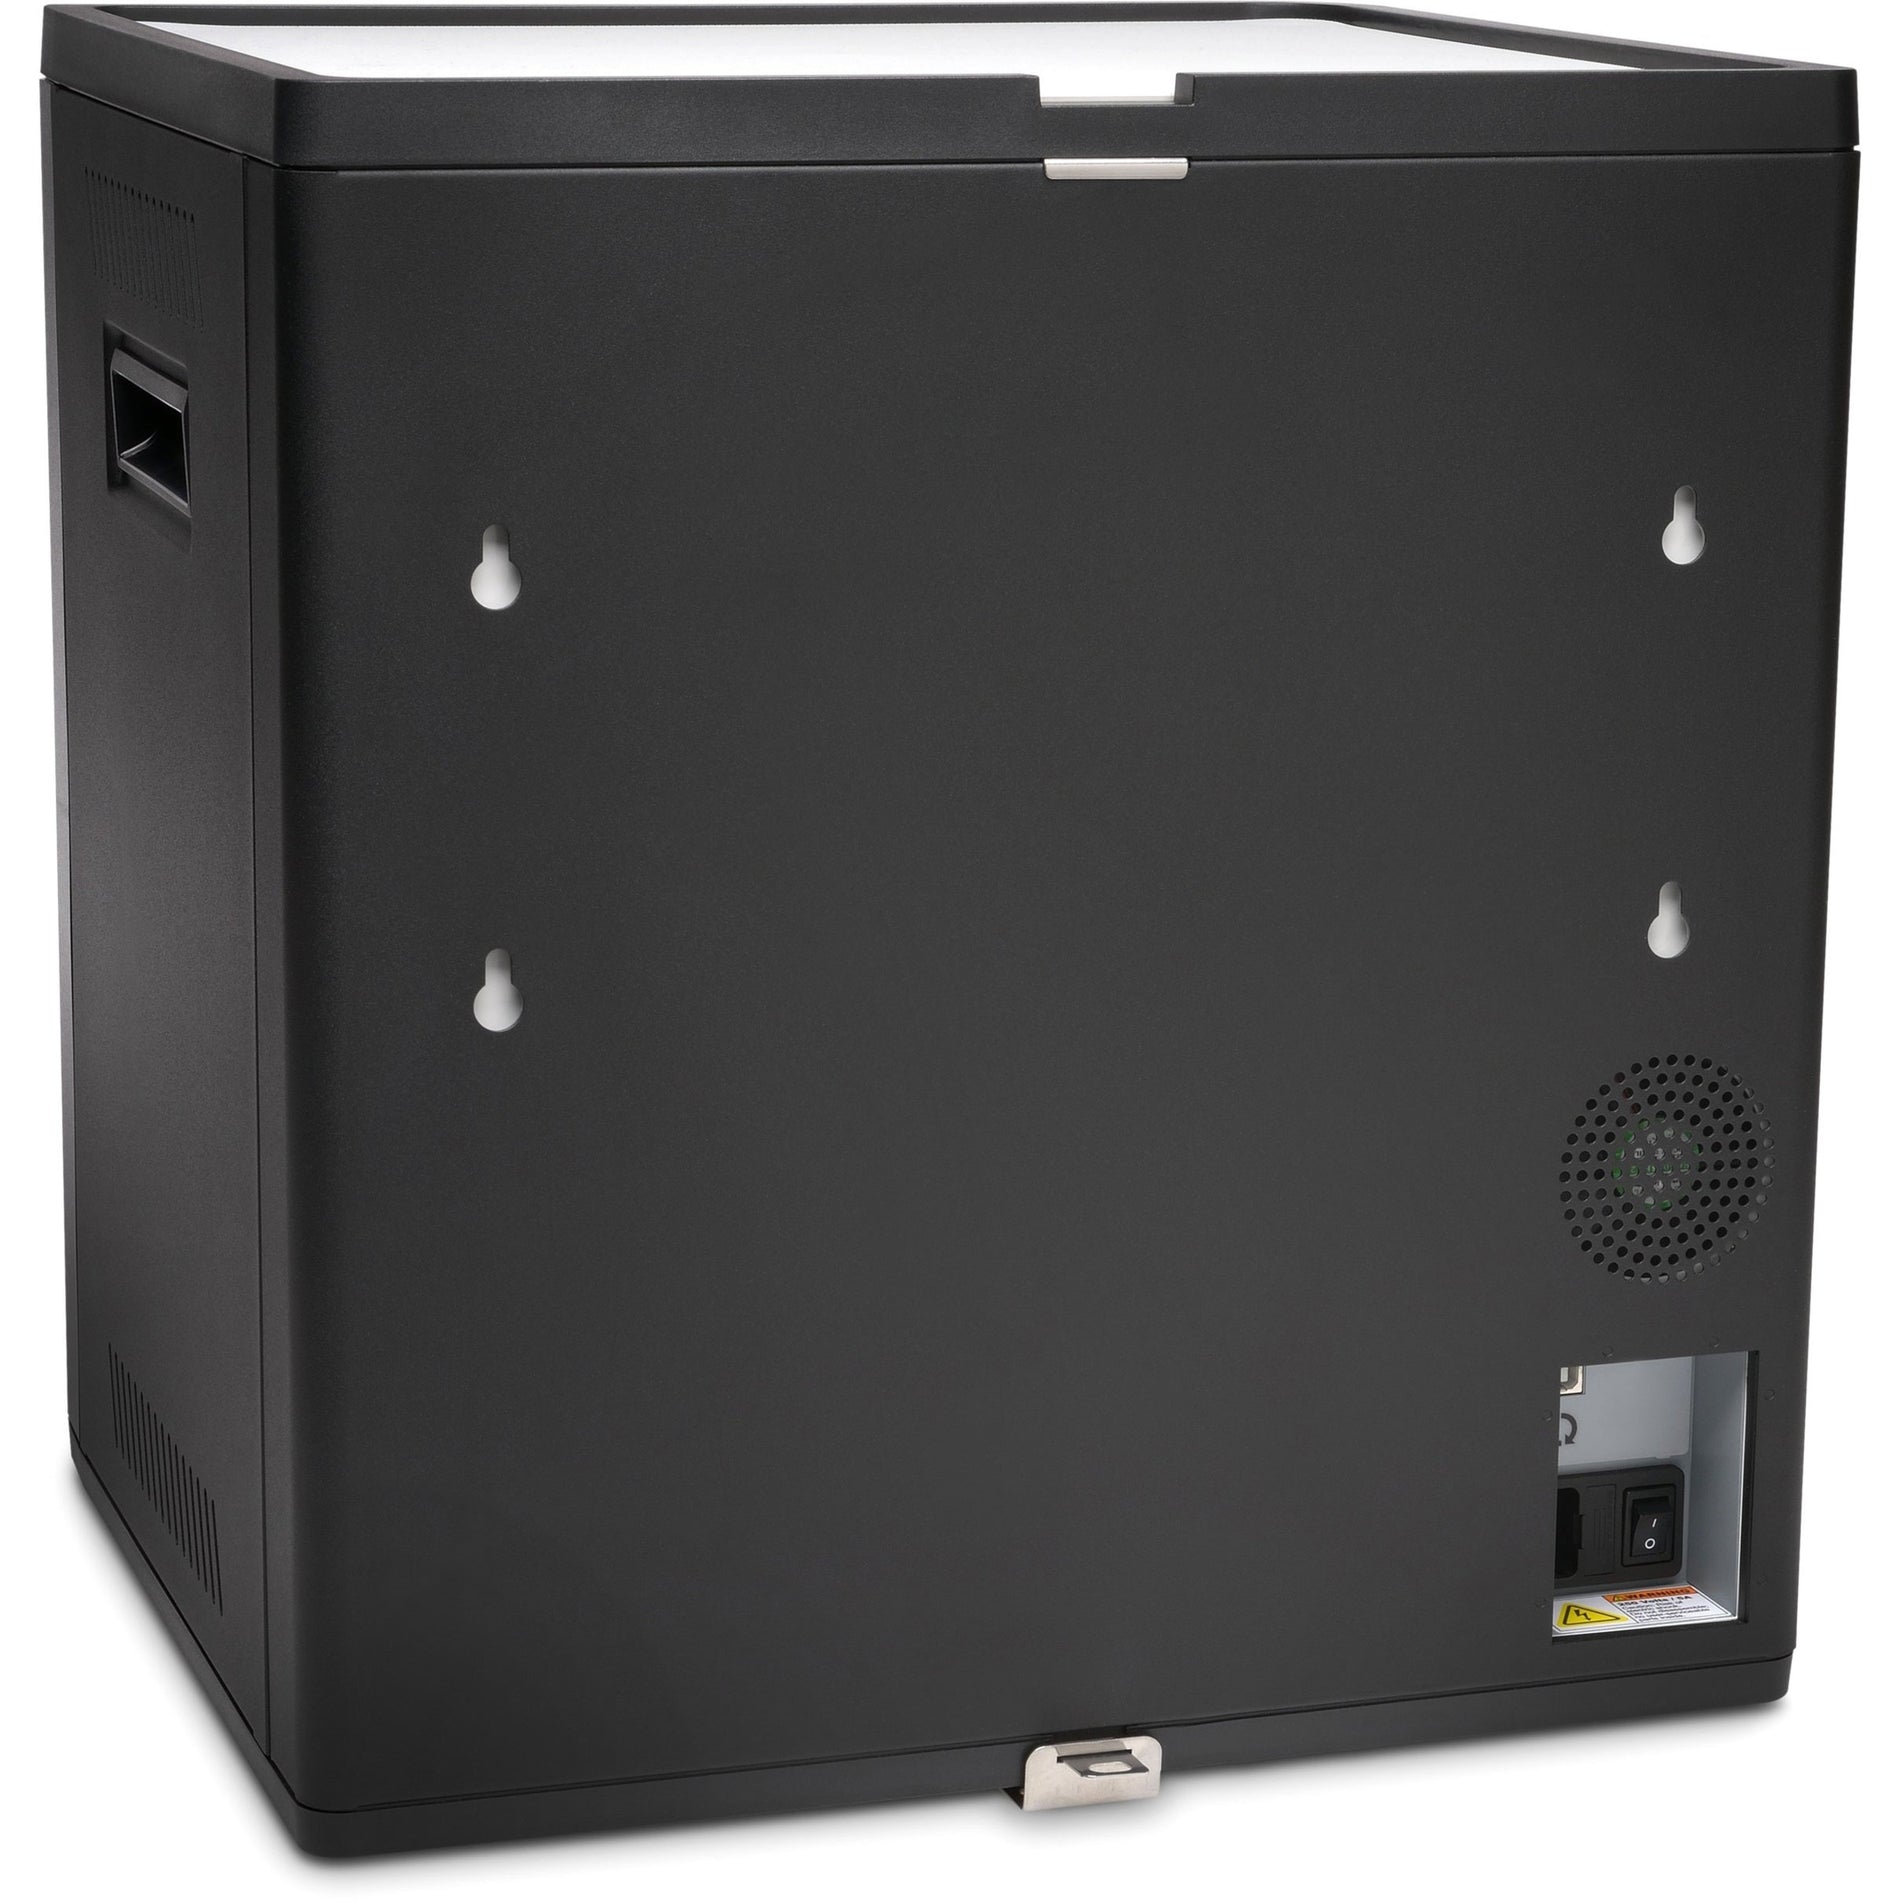 Kensington K67862AM Charge & Sync Cabinet, Universal Tablet - Black, 2 Year Warranty, USB Hub, Adjustable Shelf